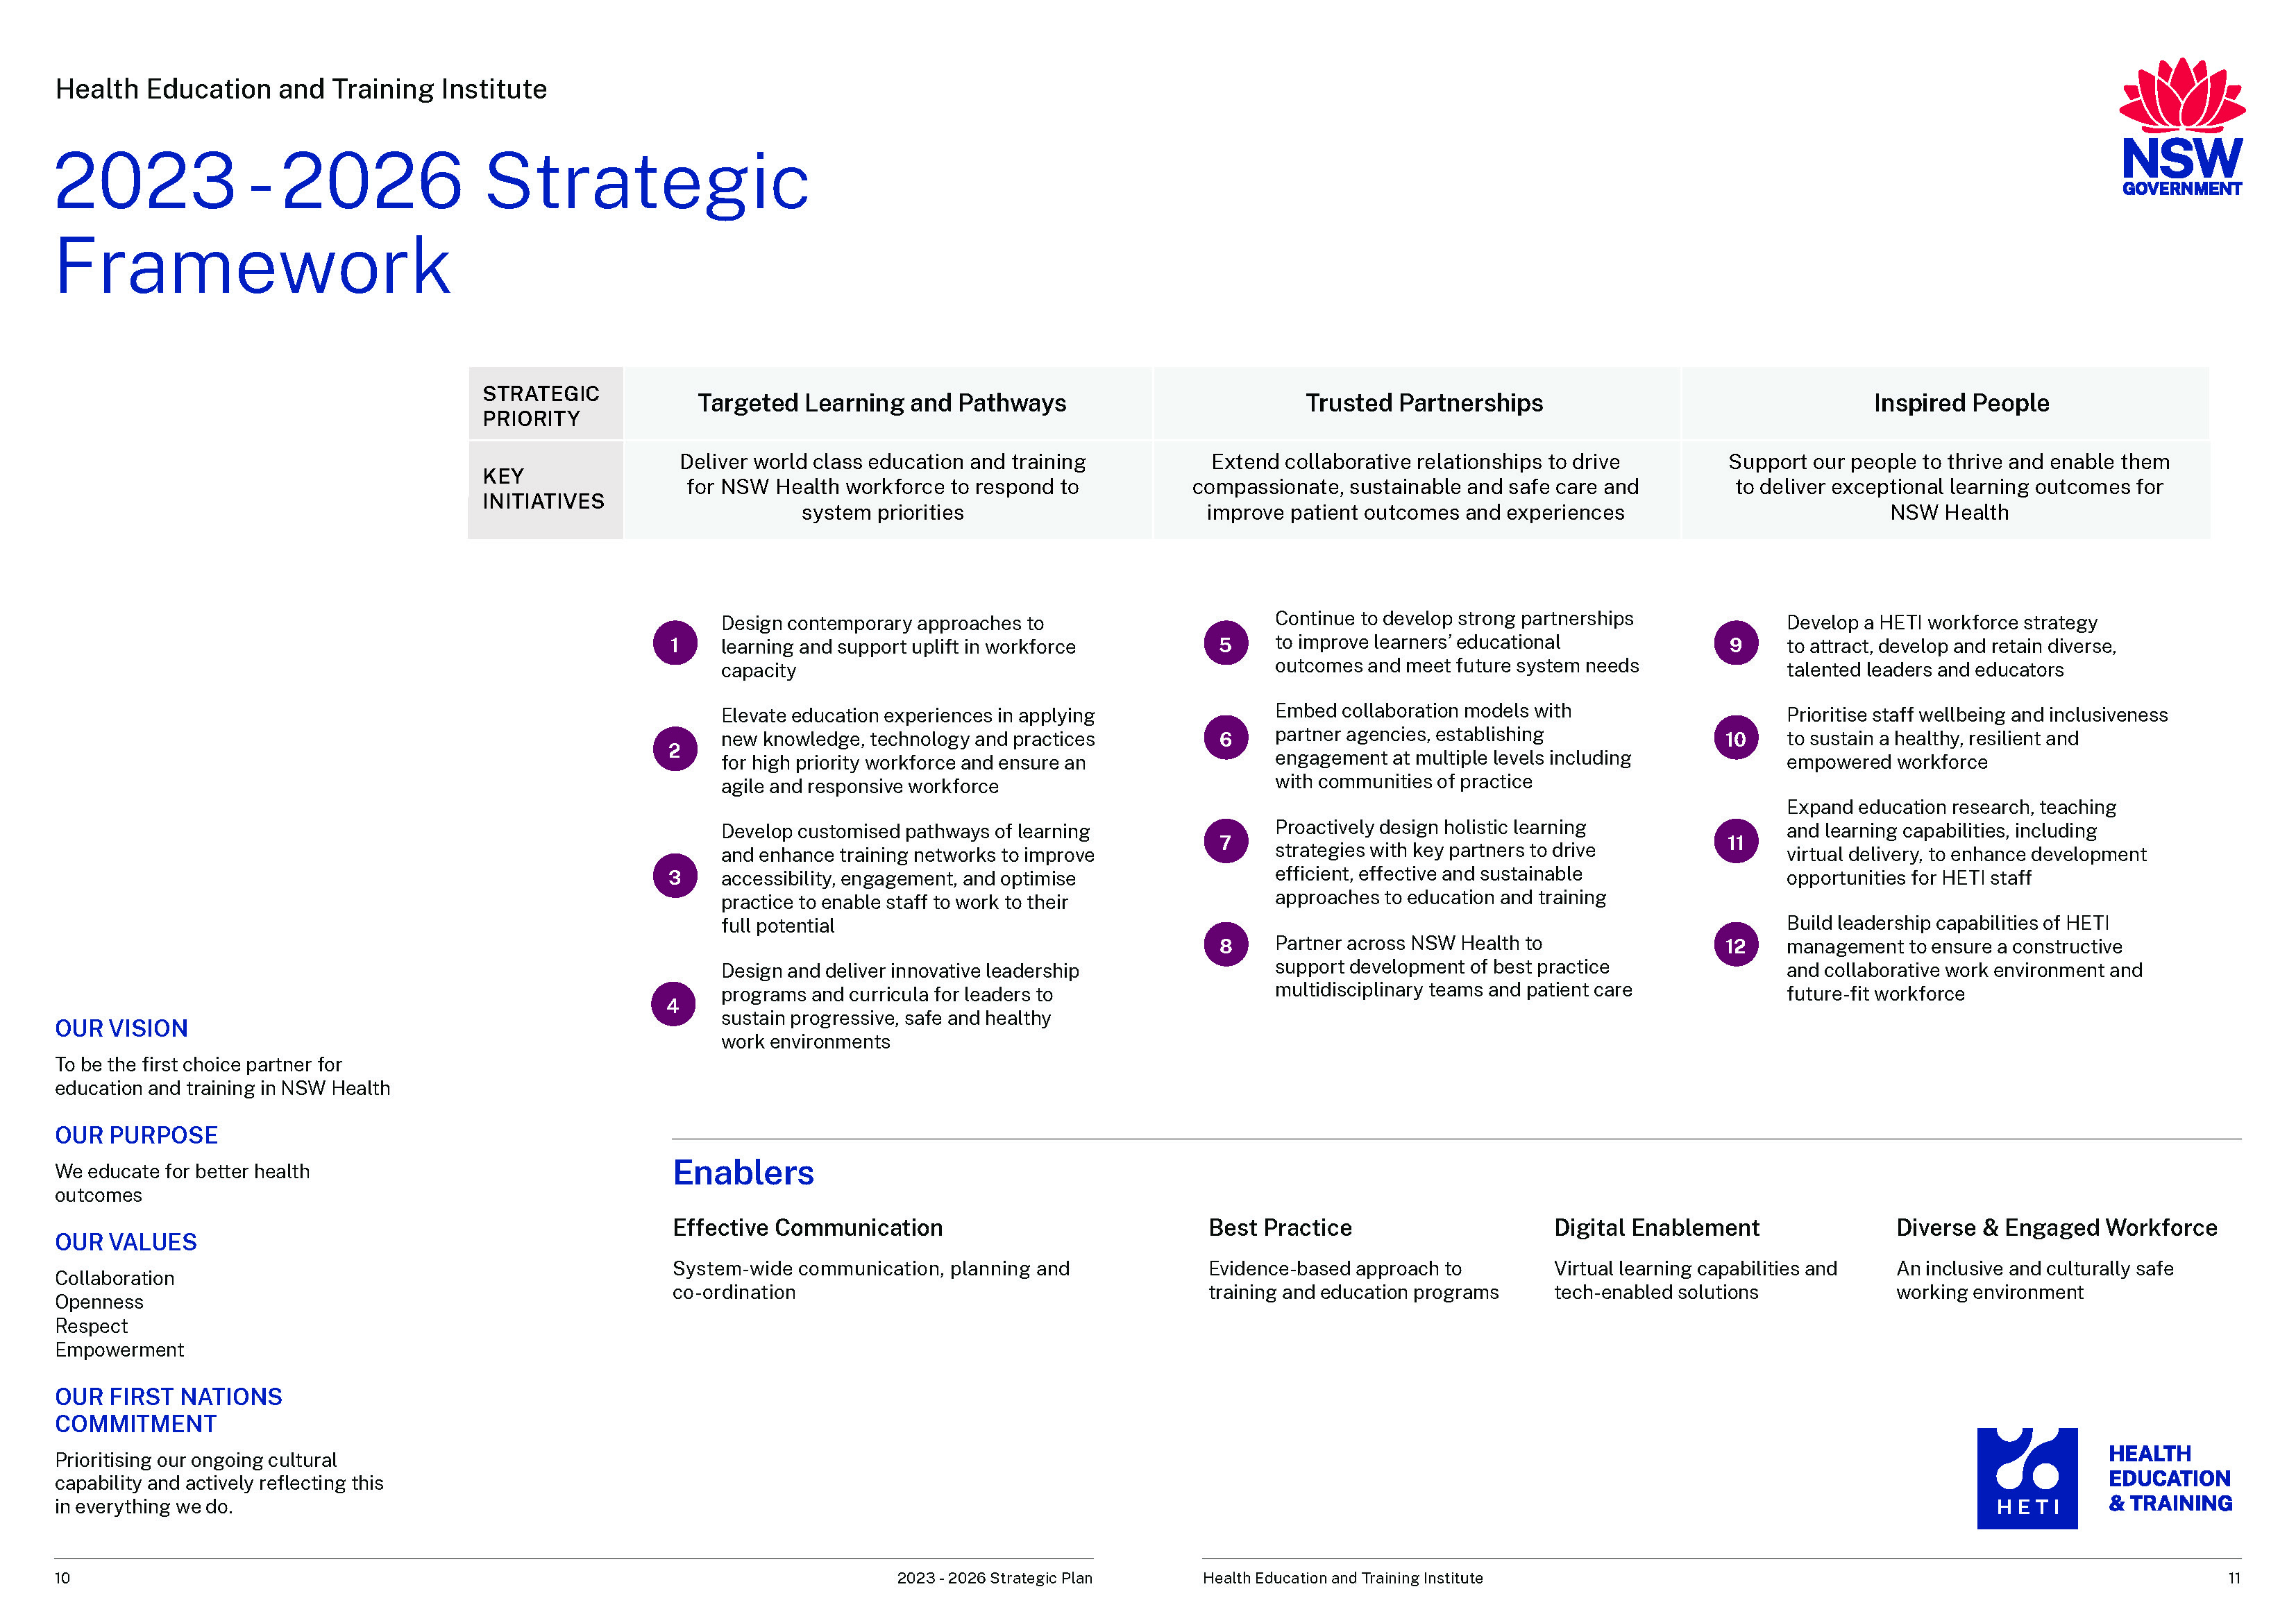 HETI Strategic Framework on a page